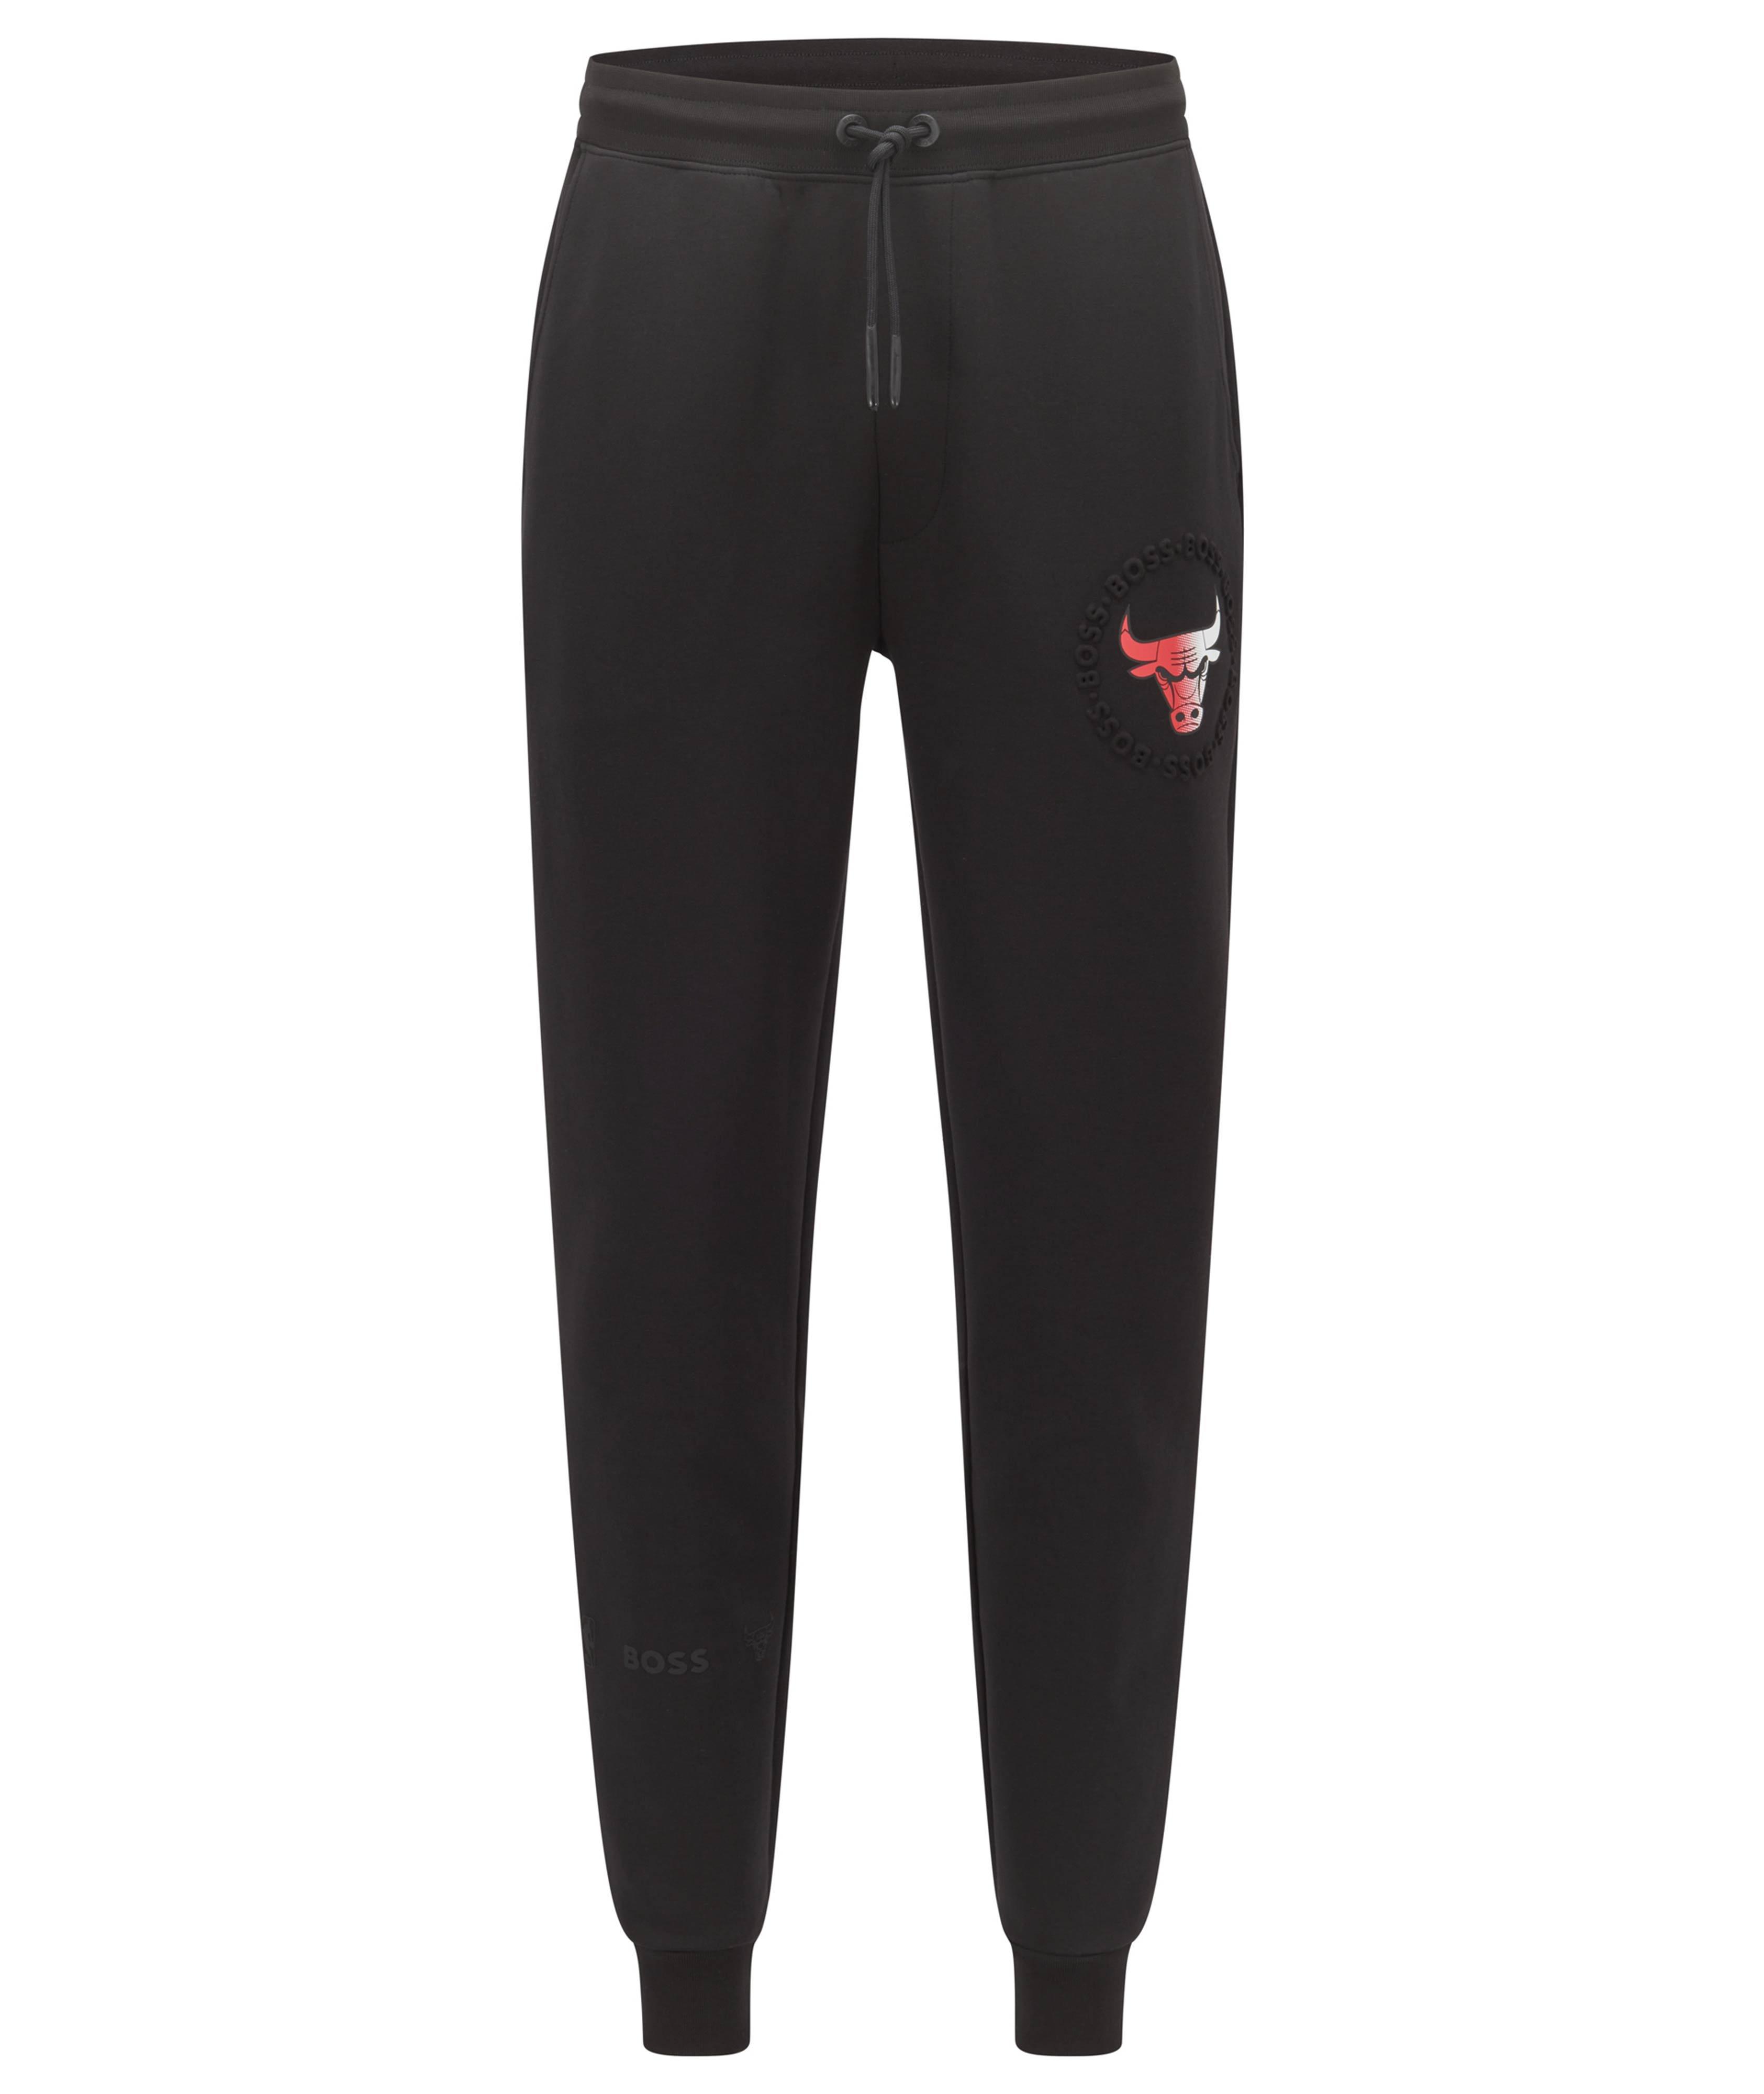 Pantalon sport avec logo des Bulls, collection NBA image 0